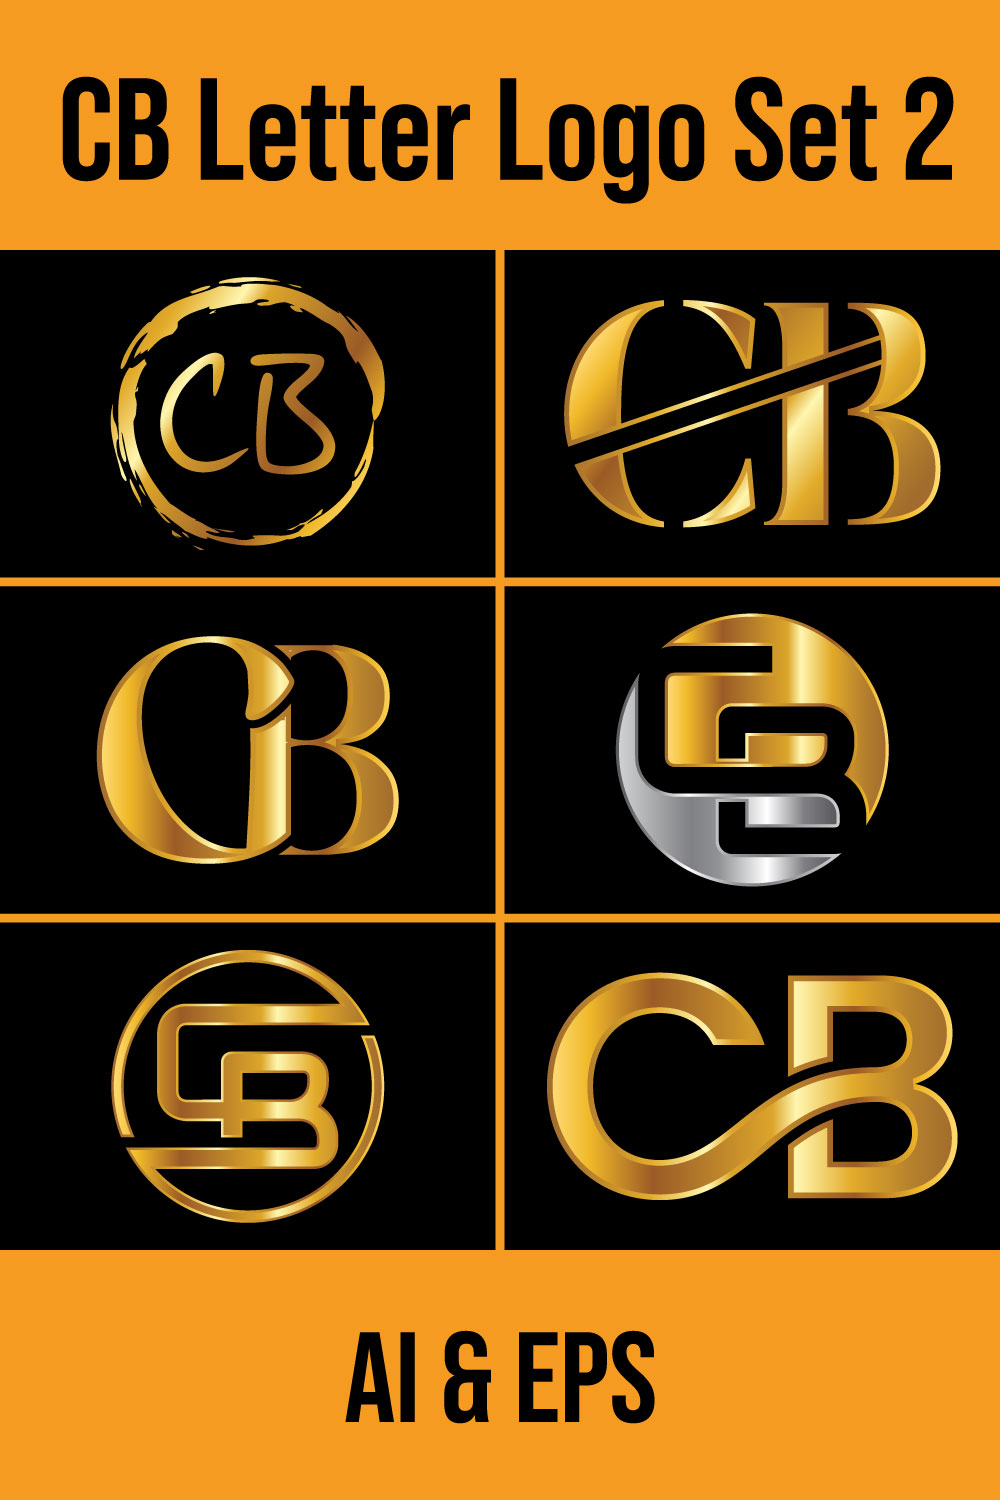 Modern B Letter Logo Concept. by Nayan Tamli on Dribbble